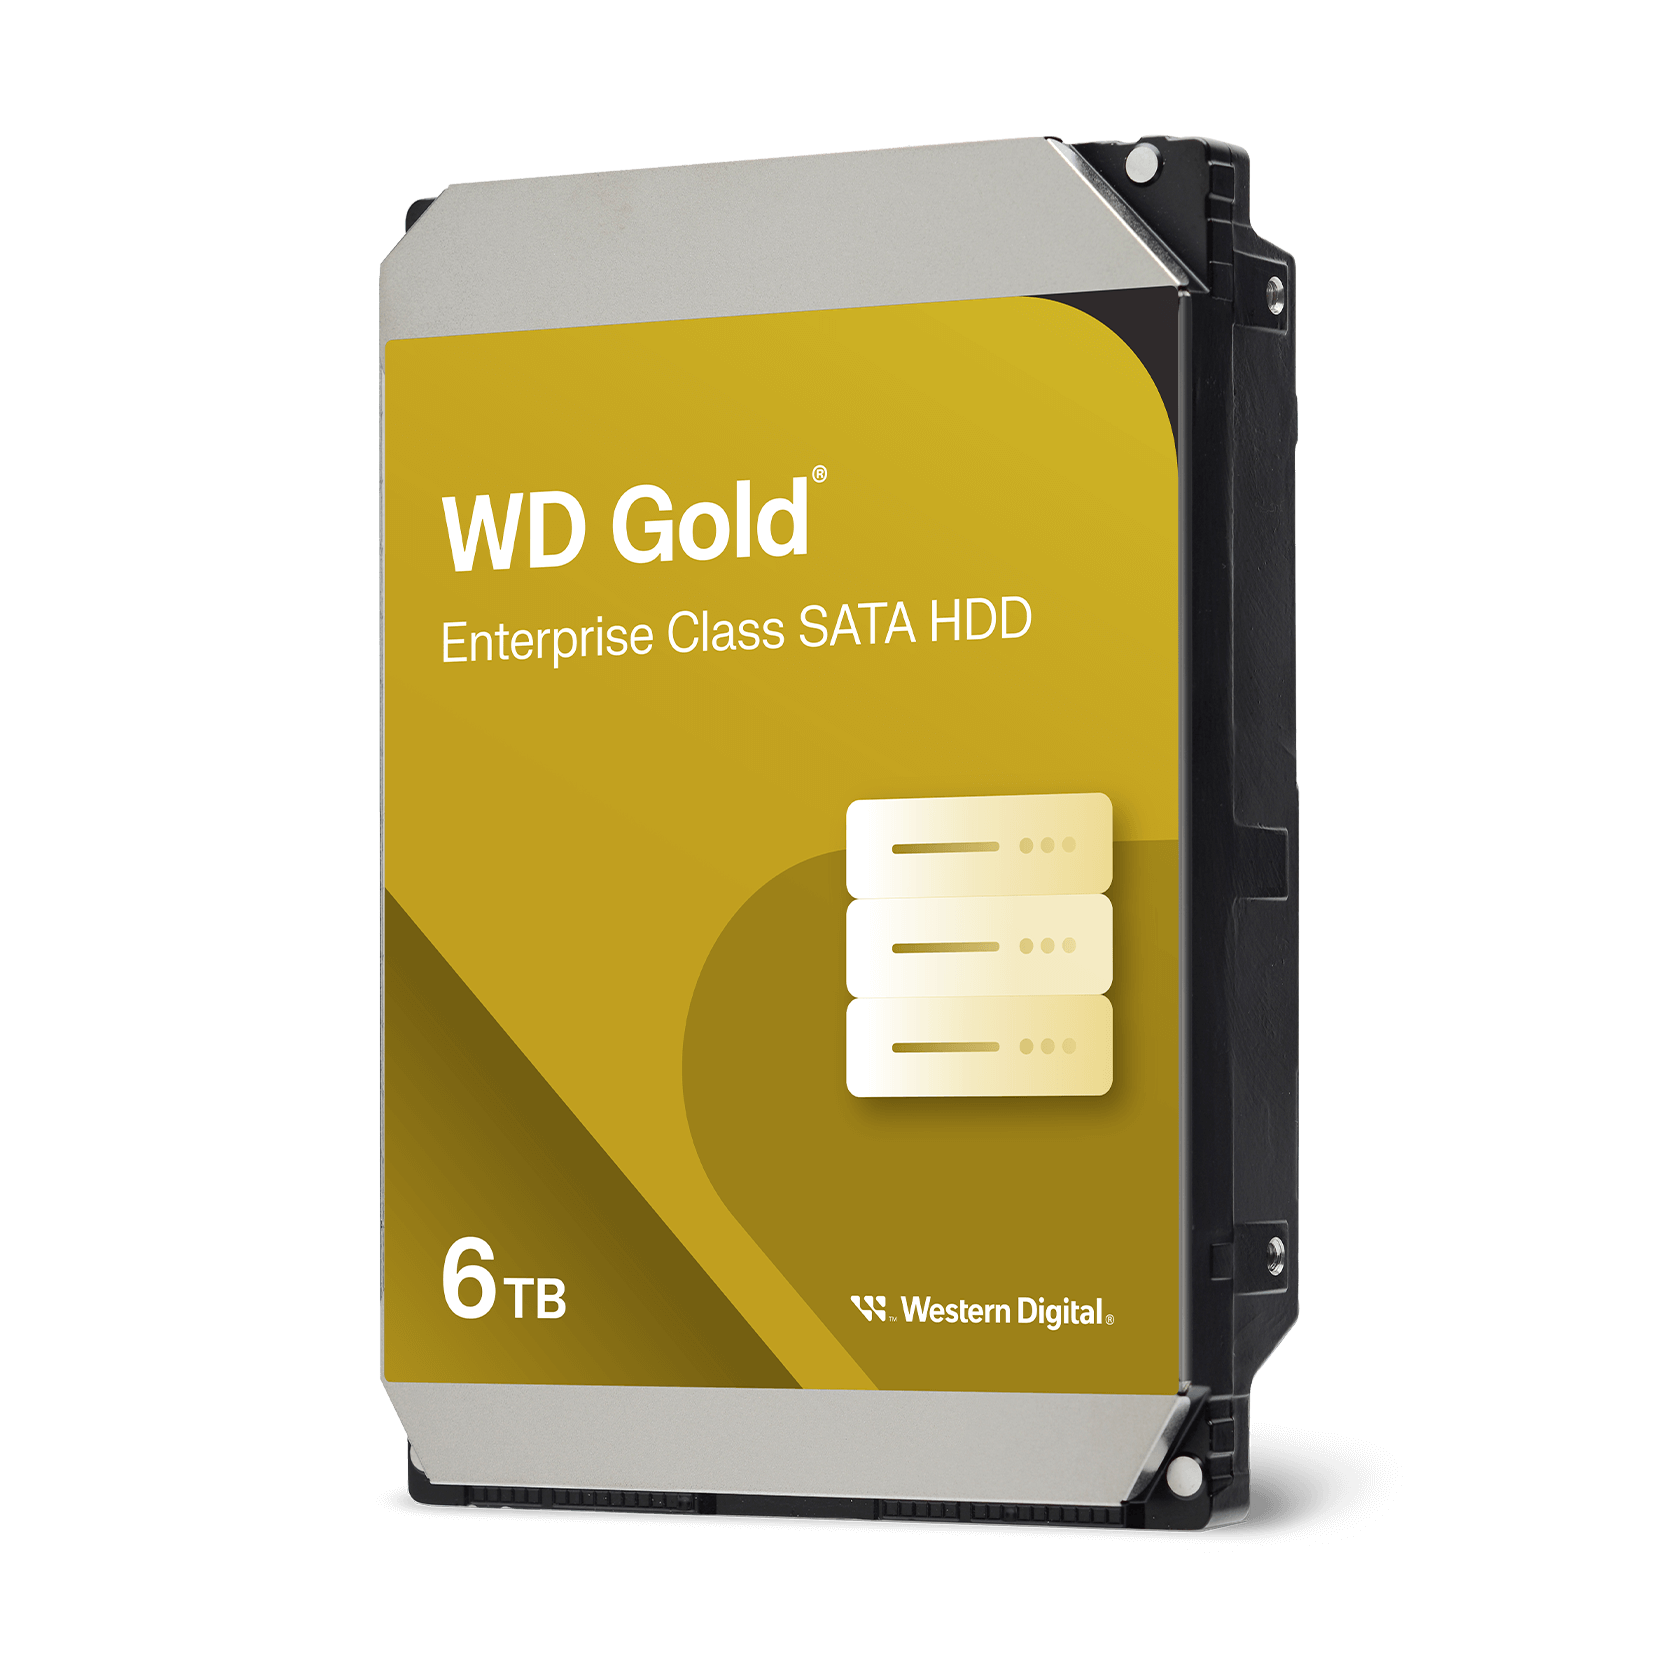 Western Digital 6TB WD Gold™ Enterprise Class SATA HDD - Internal Hard Drive - WD6004FRYZ